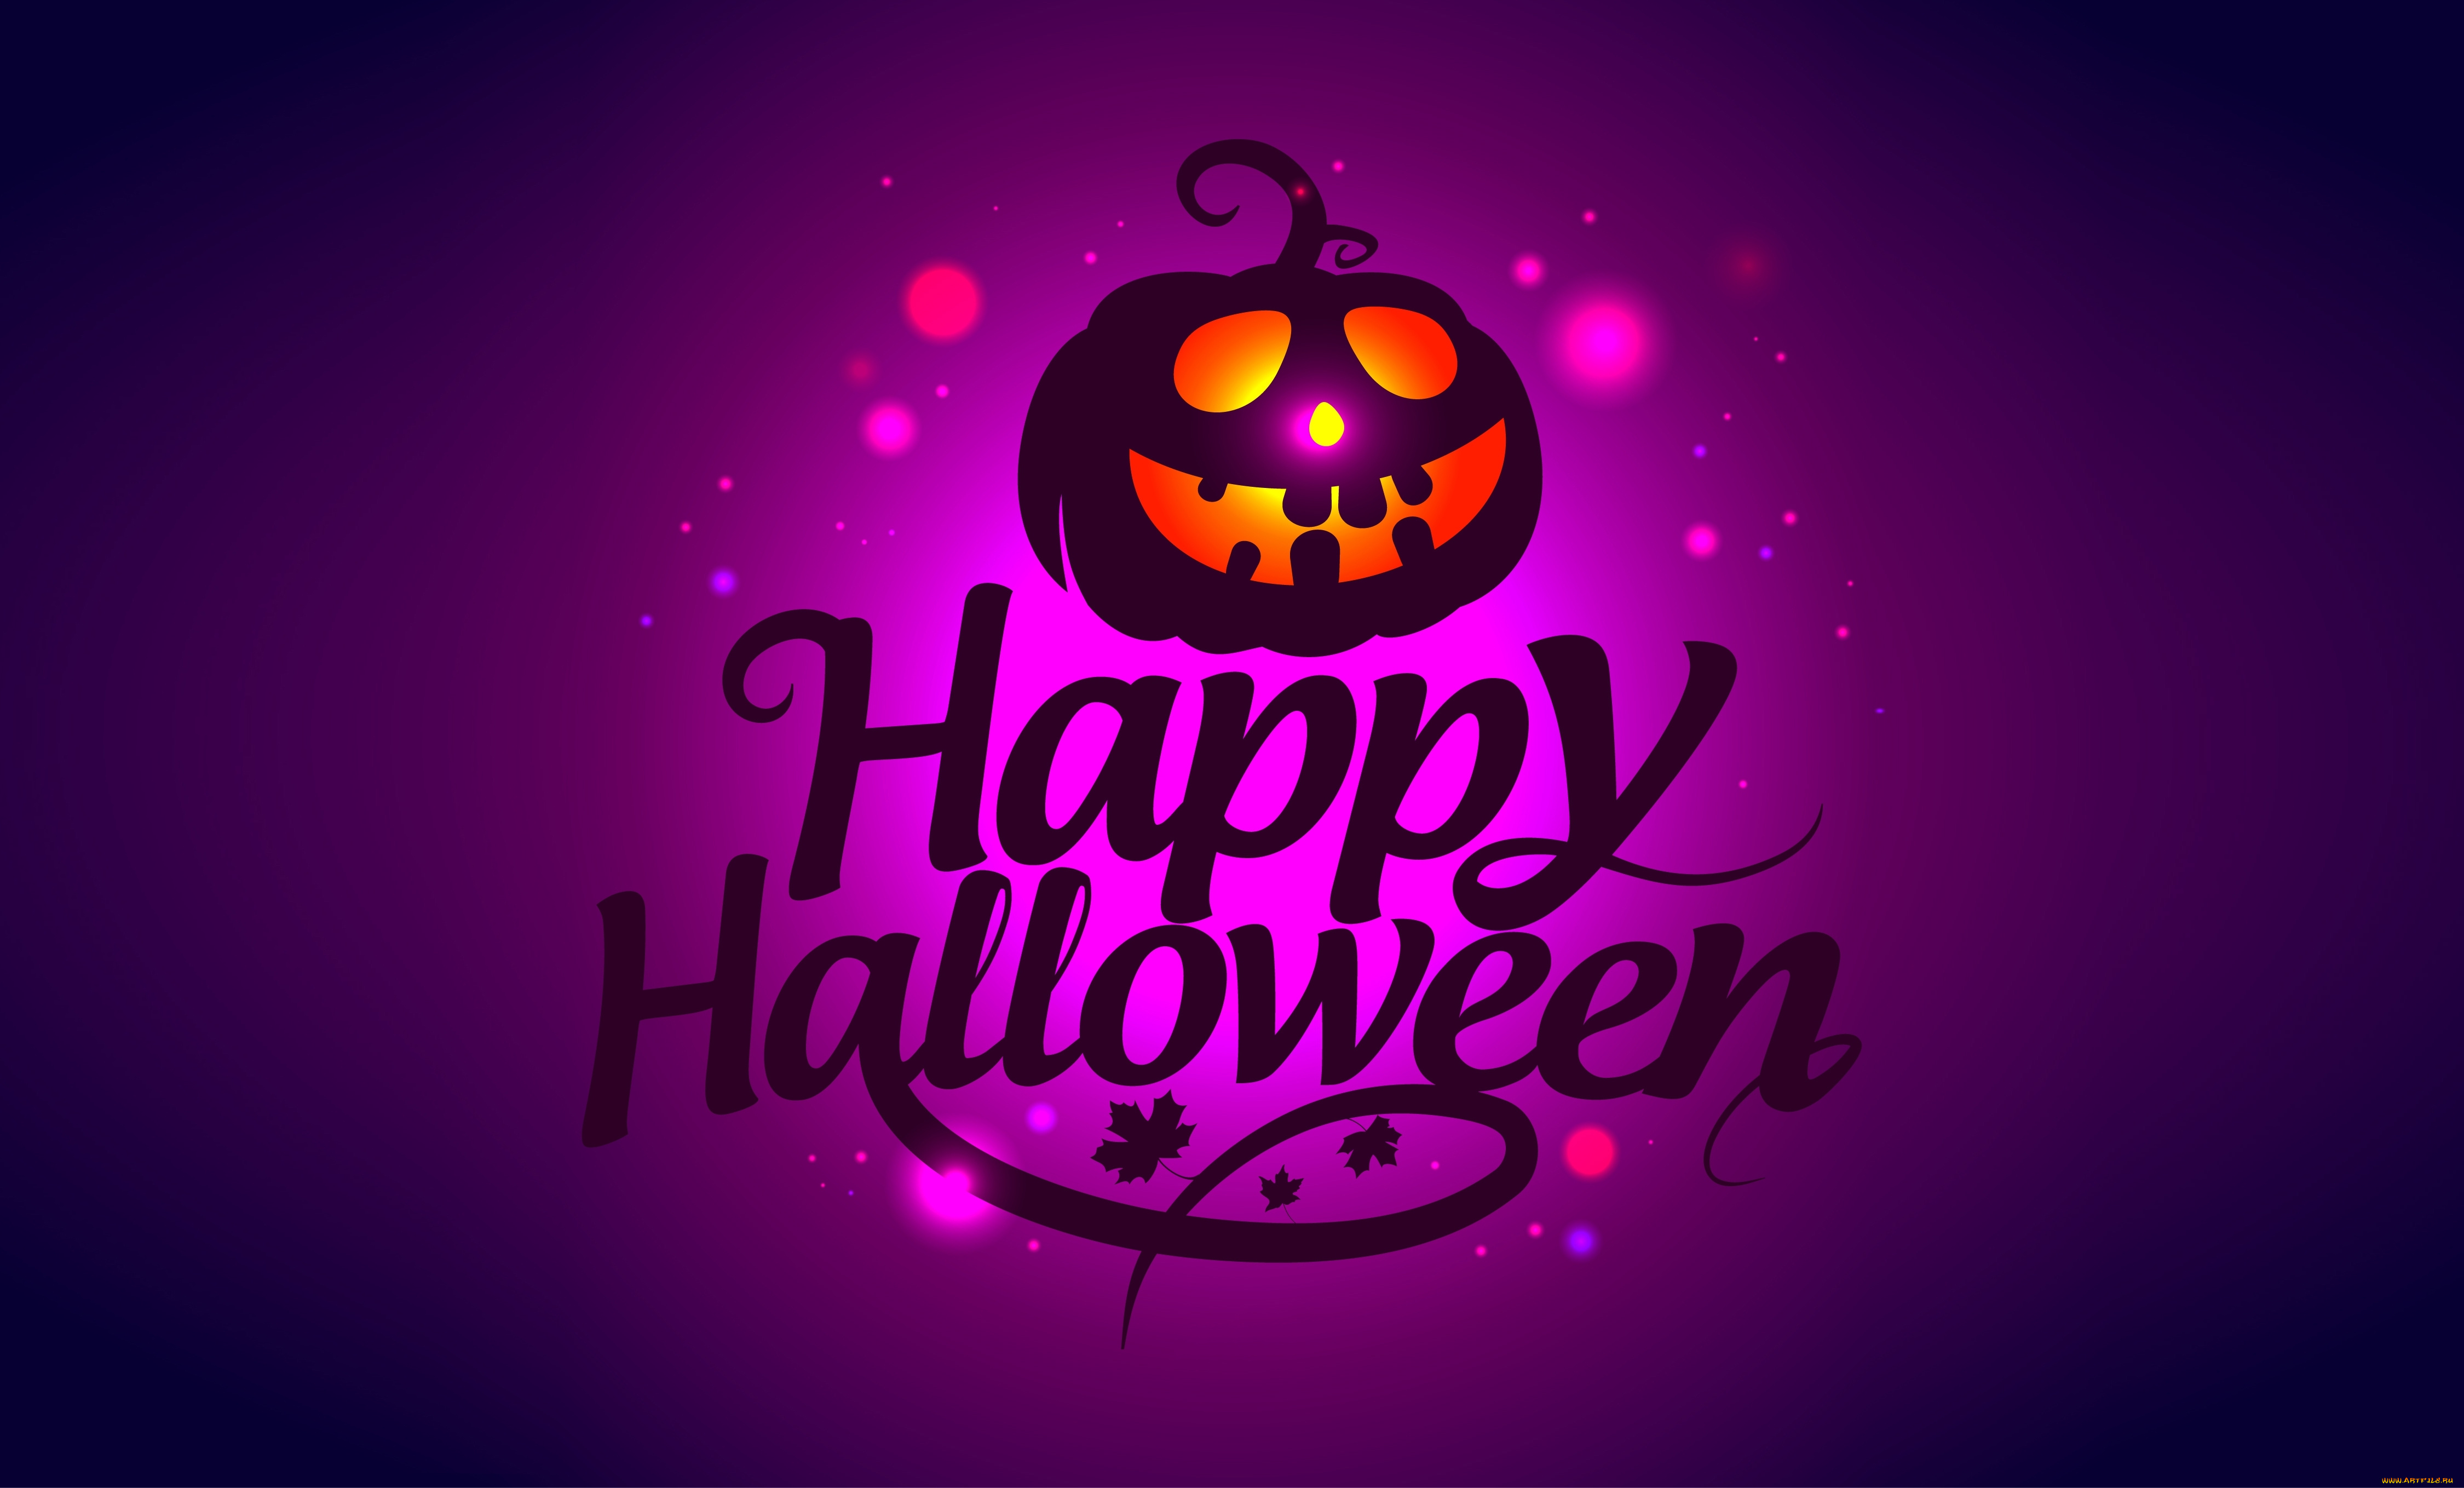 праздничные, хэллоуин, creepy, spooky, evil, pumpkin, scary, happy, halloween